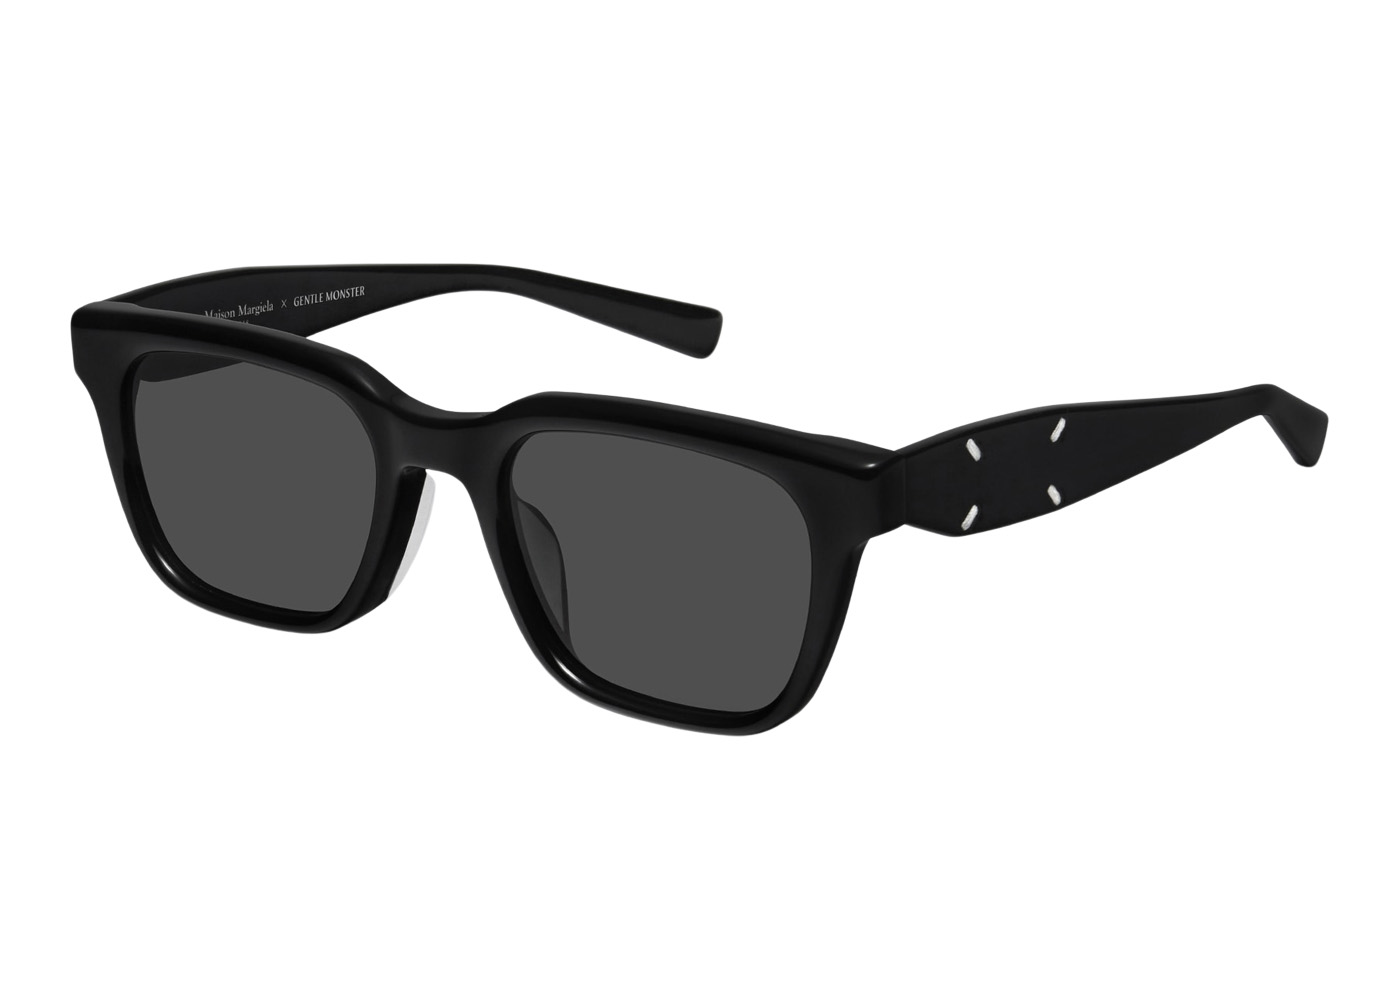 Gentle Monster Maison Margiela Square Sunglasses Black (MM110 01)